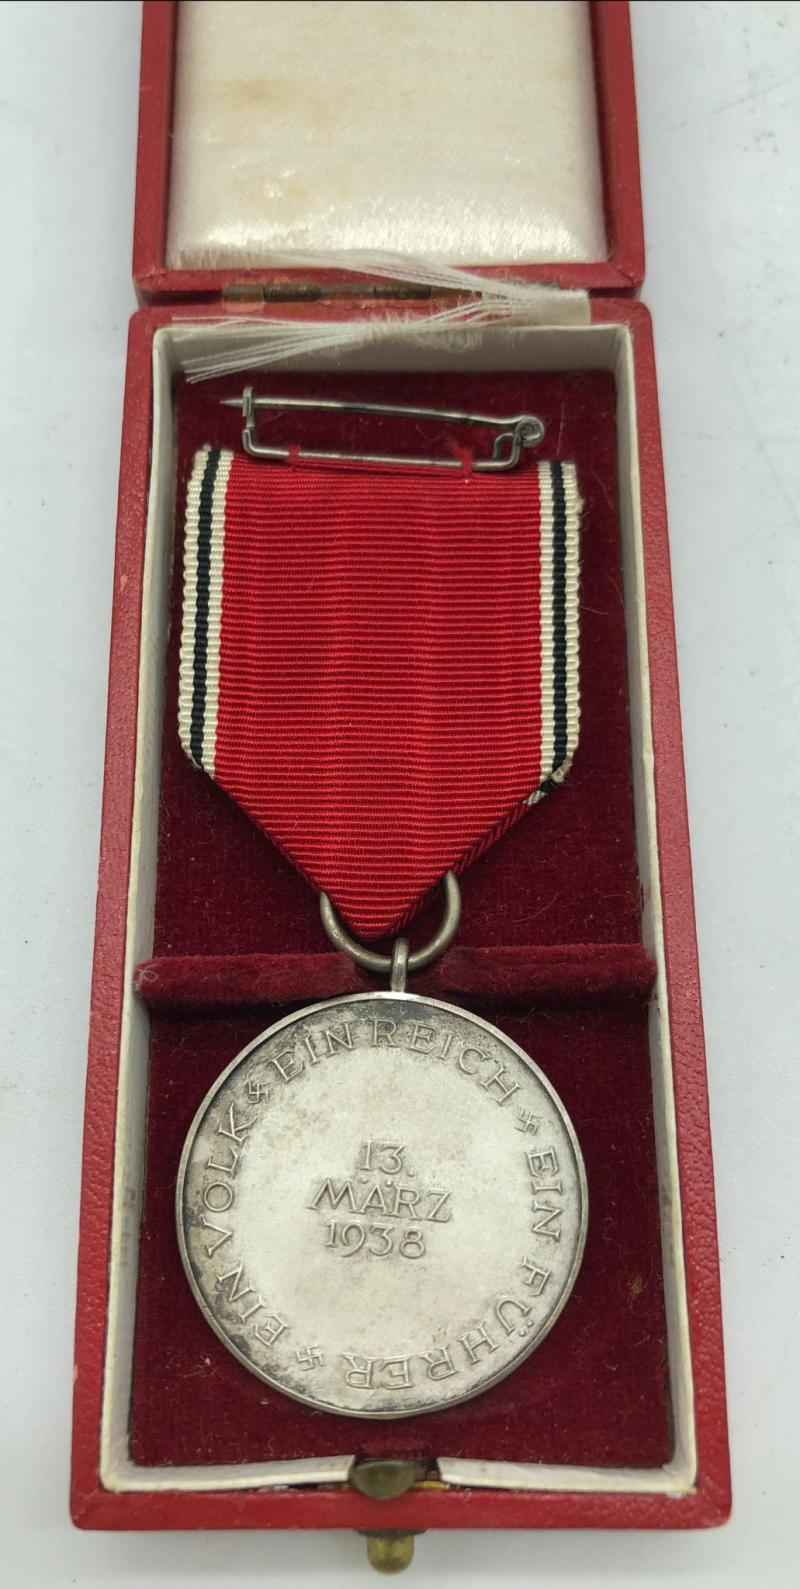 Medaille 13. marz 1938. Anschluss Medaille.